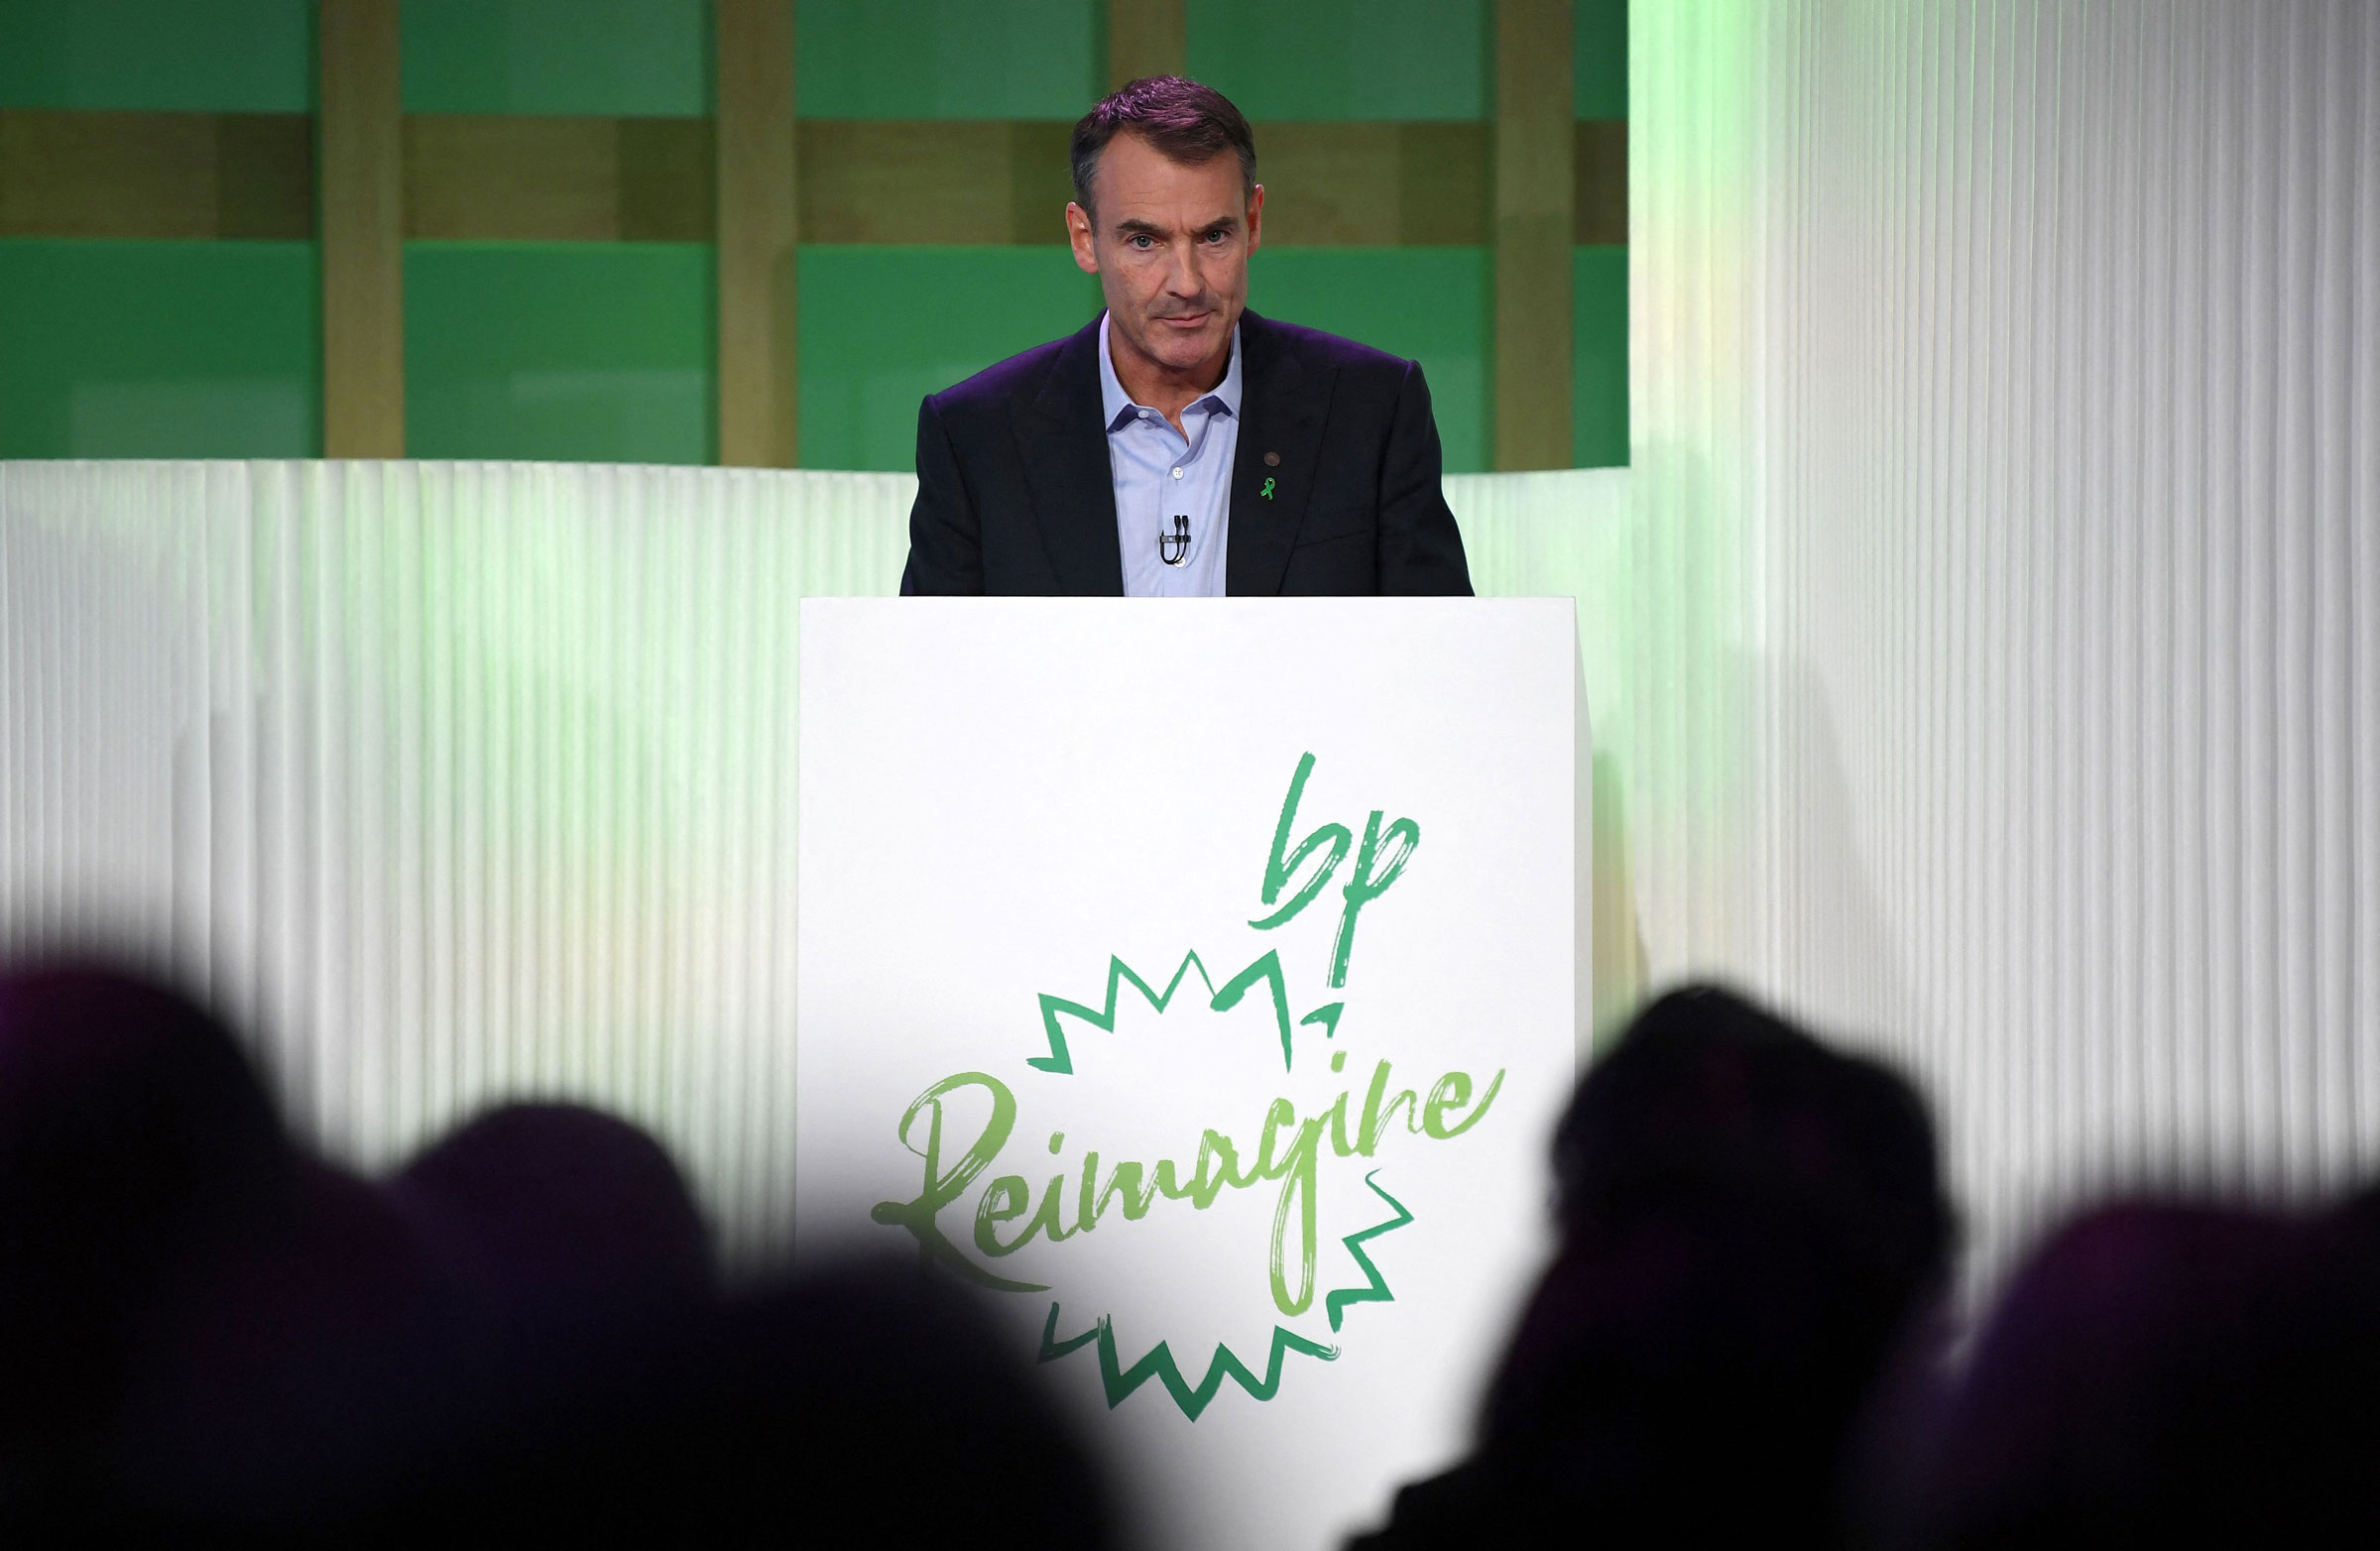 BP CEO Bernard Looney speaks during an event in London